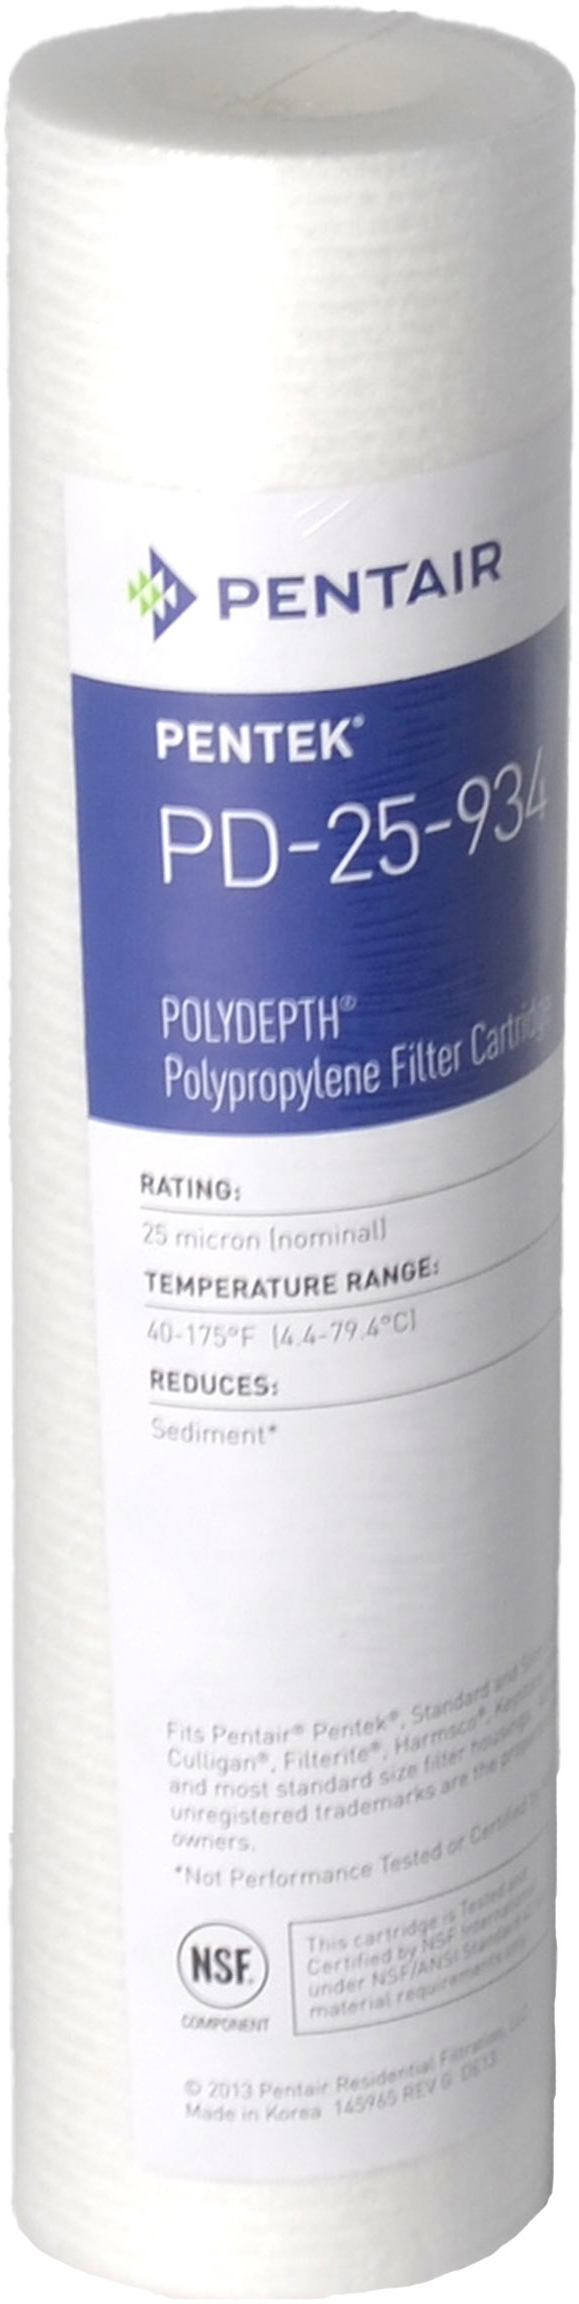 Pentek PD-25-934 Polydepth (155751-43)